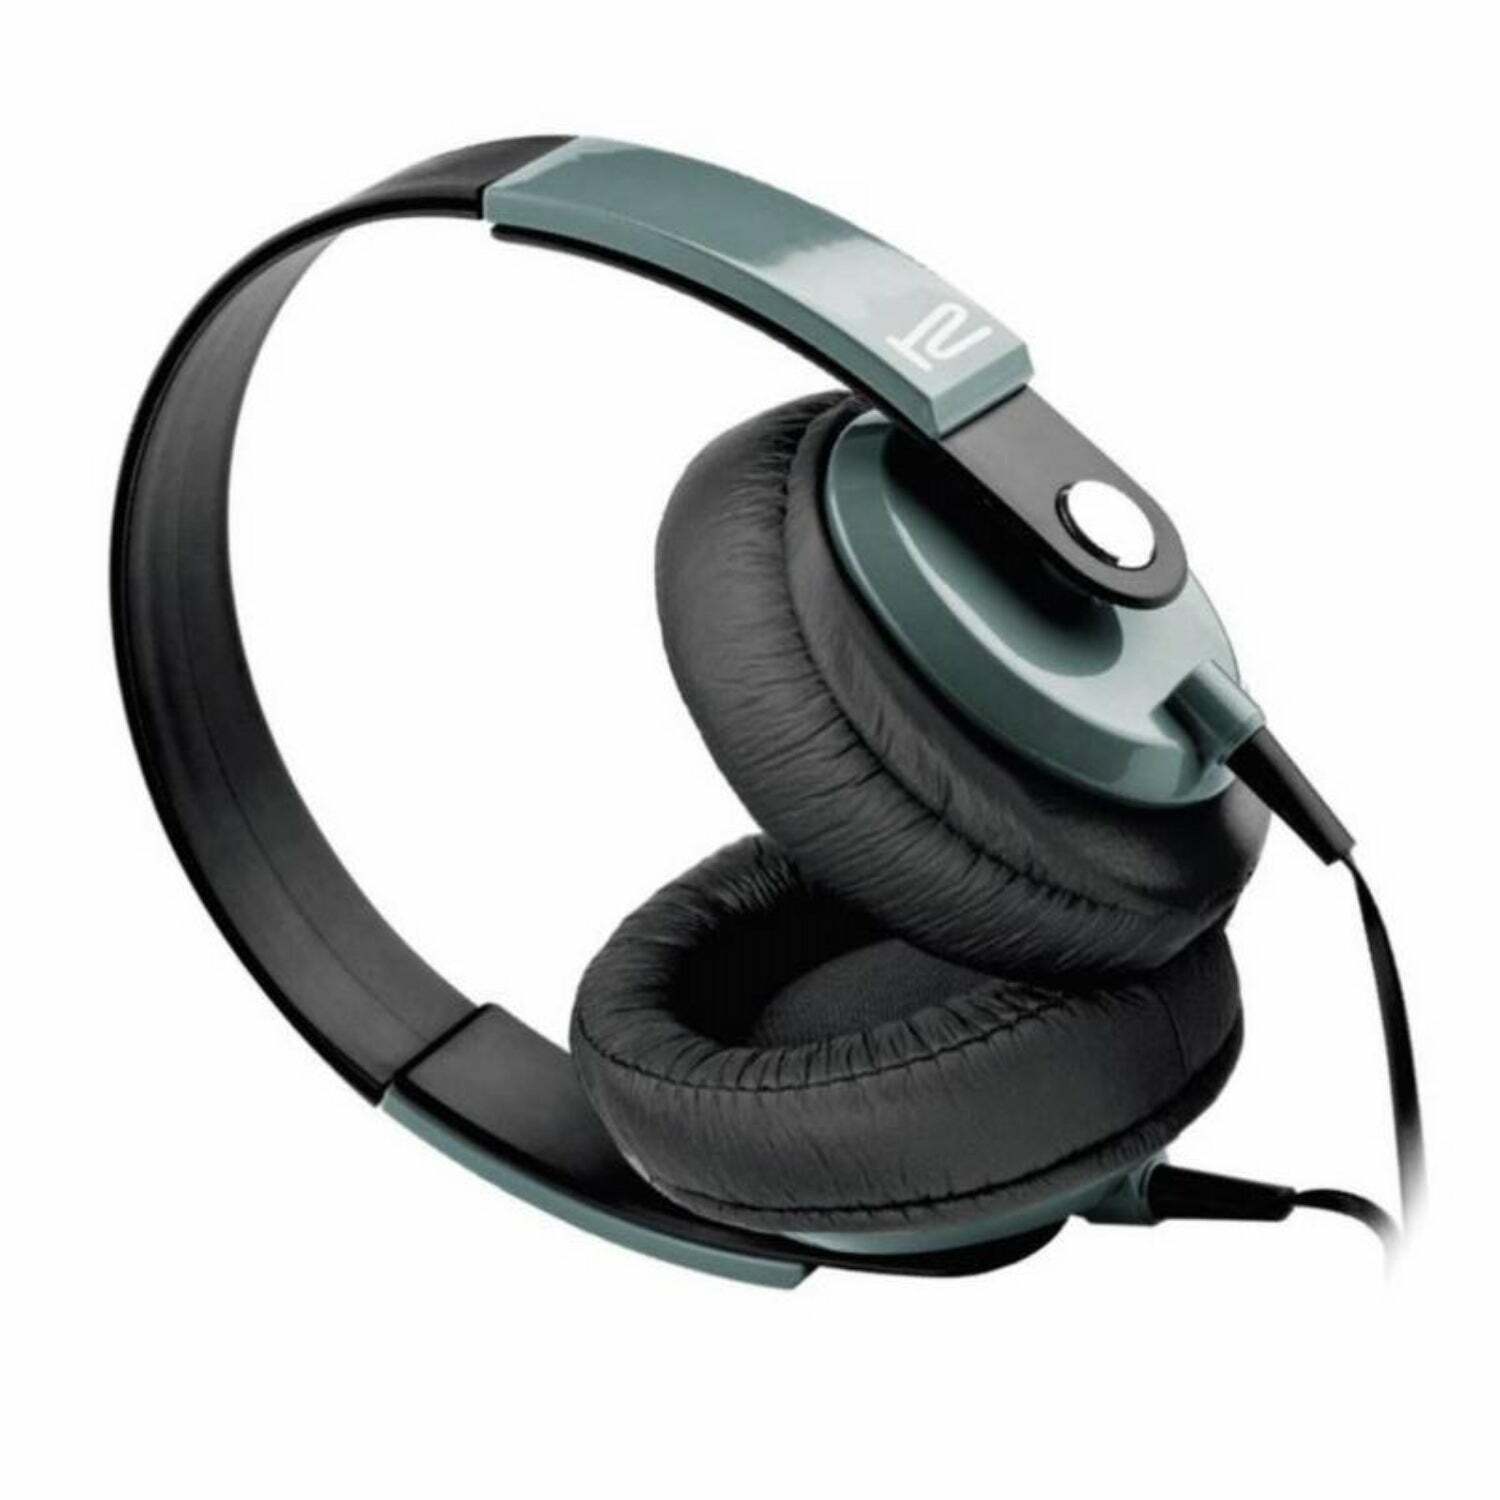 Klip Xtreme - Obsession KHS-550BK Wired Headphones High Quality Audio - Black